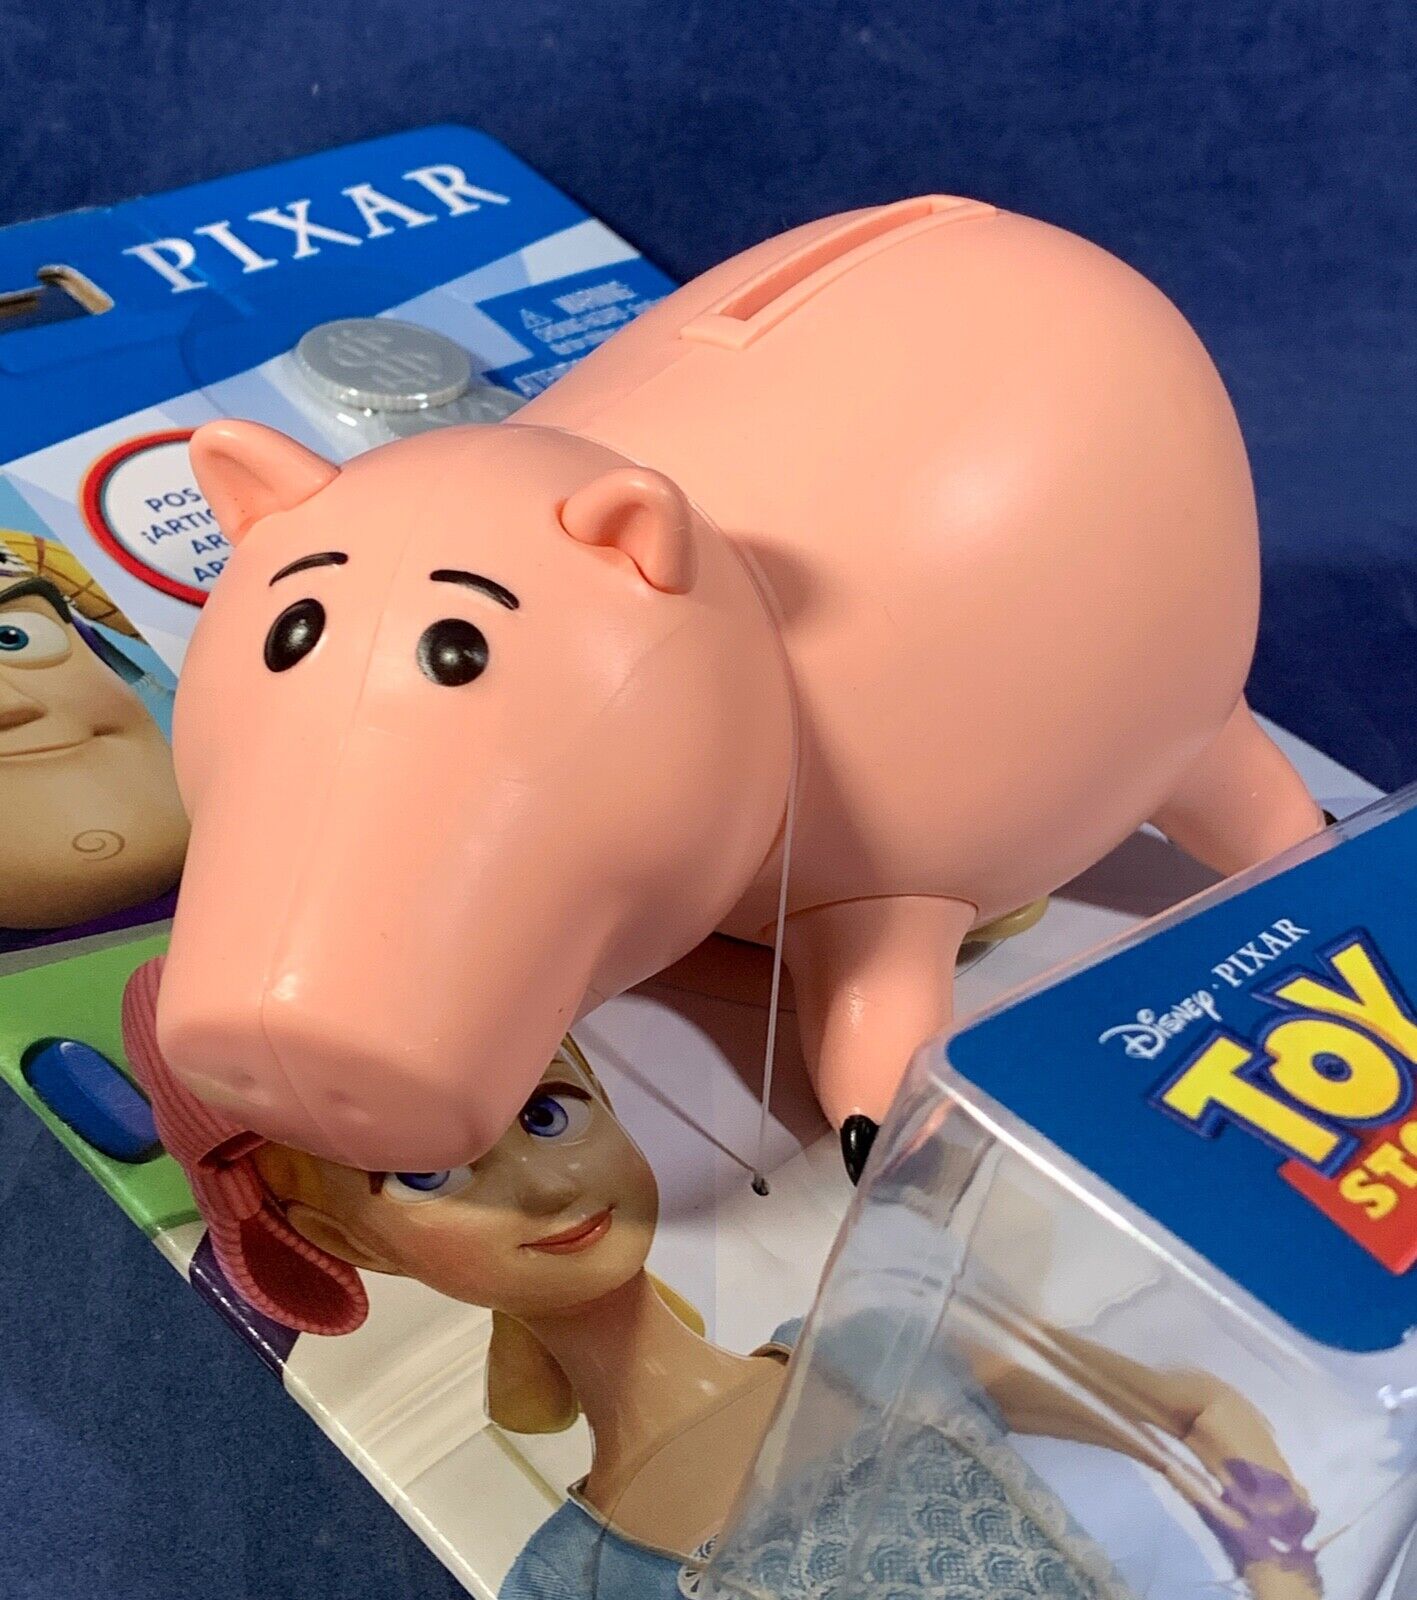 6" HAMM Pixar Toy Story FIGURE Piggy BANK Posable COINS Stopper HNN50 Pig 2022